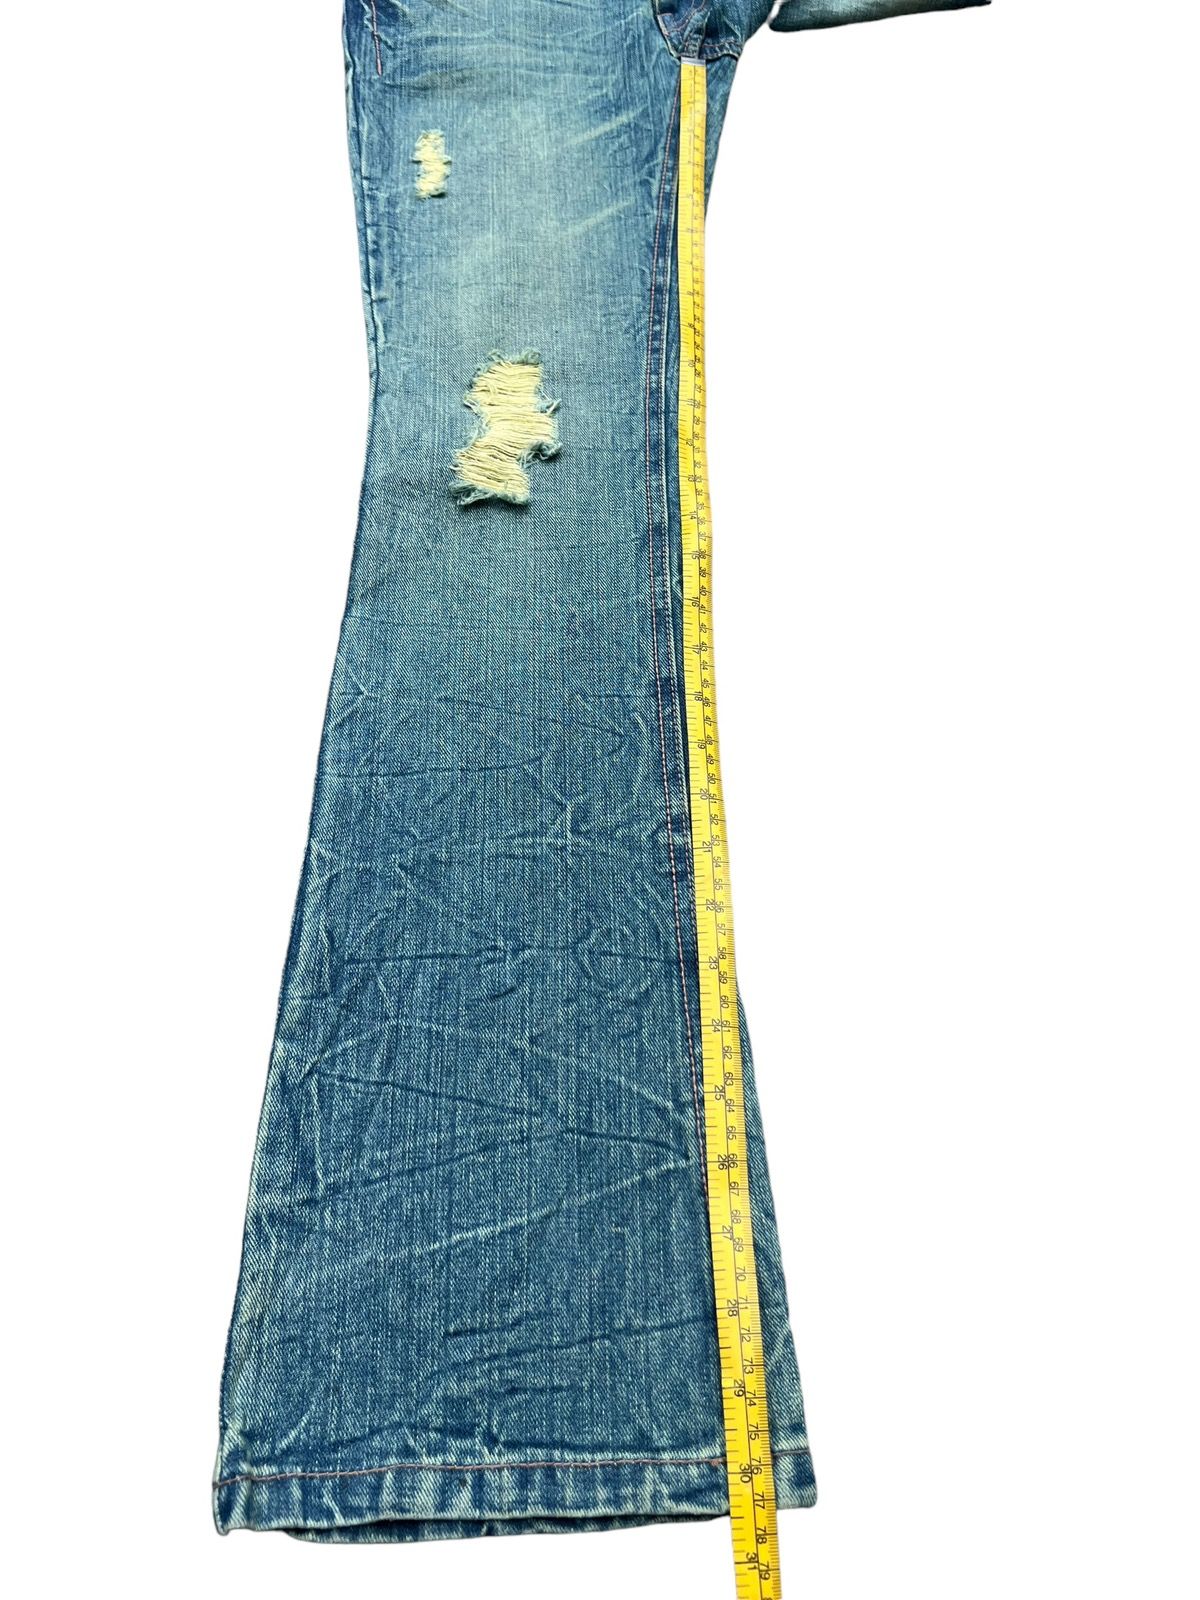 Hype - Japanese Brand Distressed Mudwash Flare Denim Jeans 28x30.5 - 11